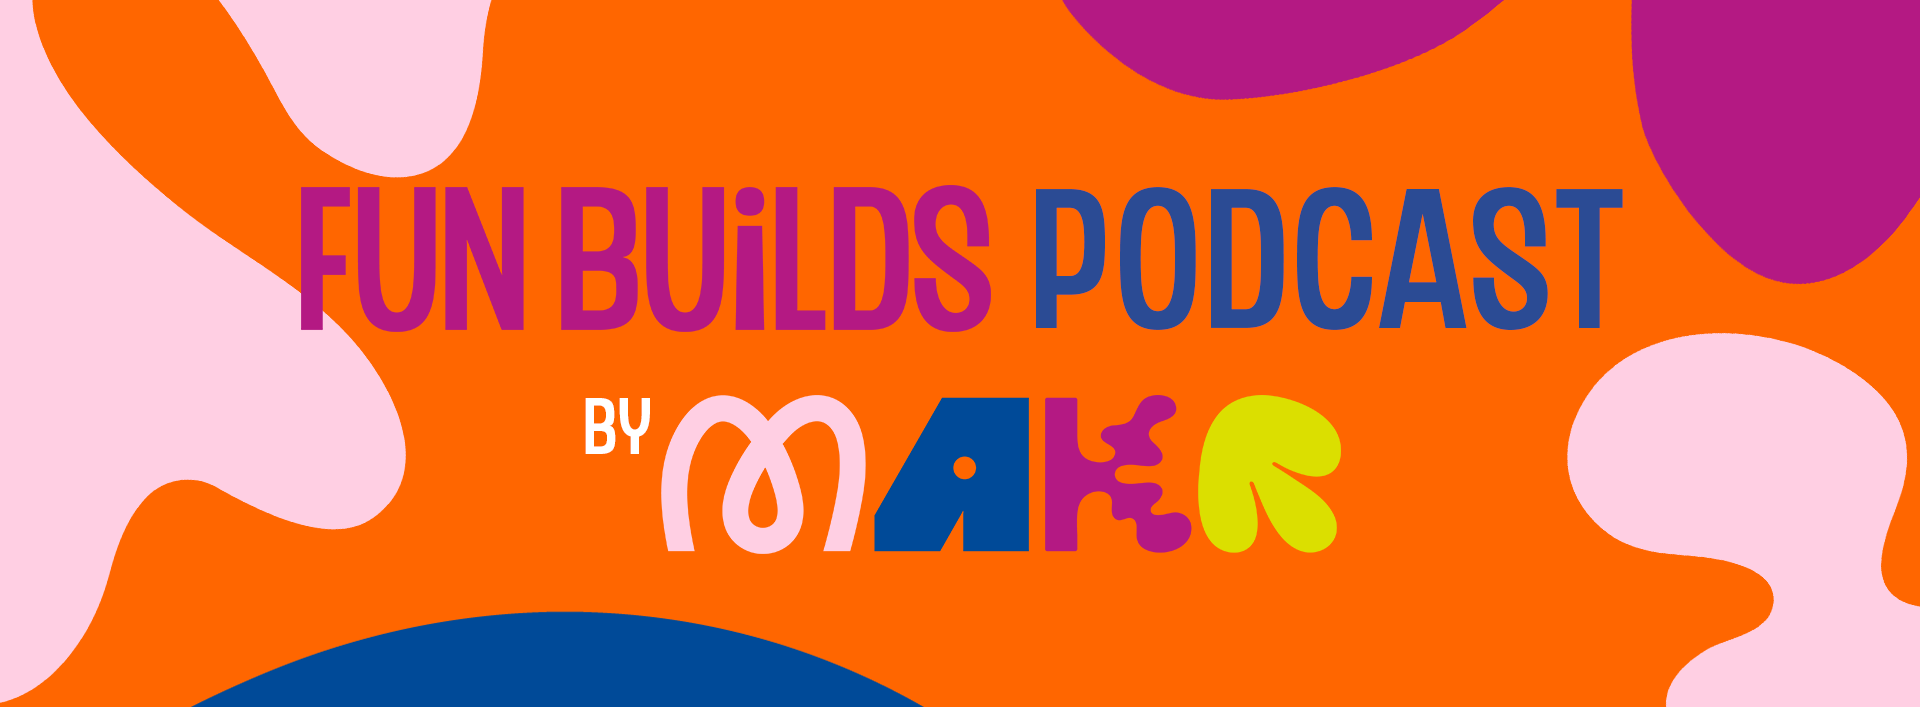 Fun Builds Podcast Parkworks